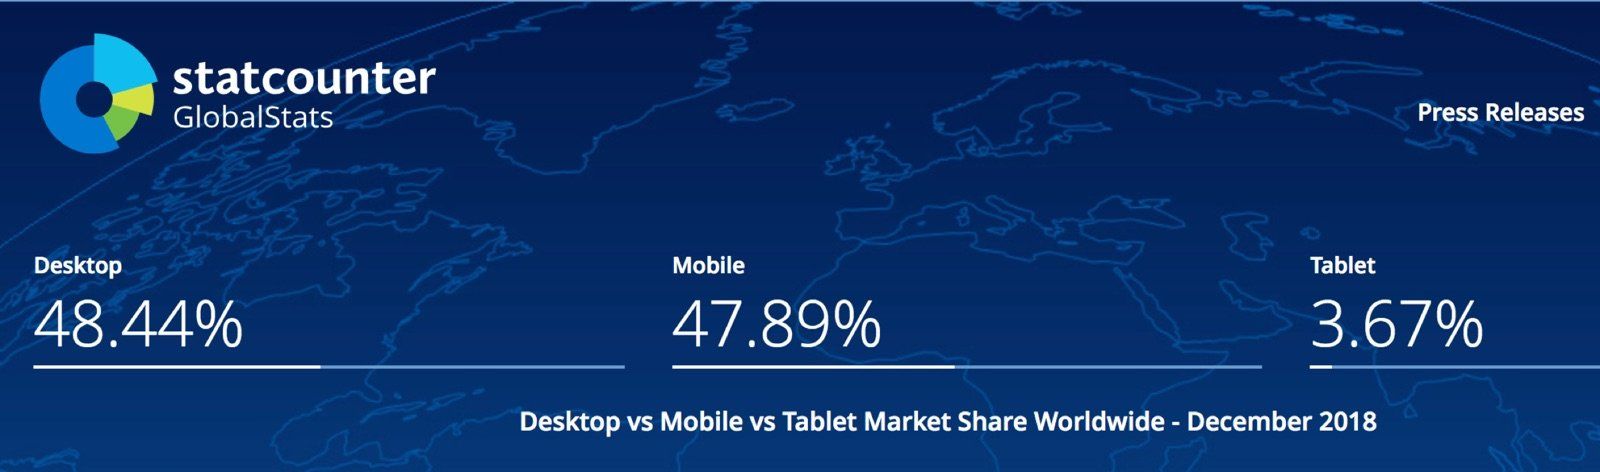 Desktop vs. Mobile Worldwide Market Share as of December, 2018 shows desktop and mobile in a dead heat statistically